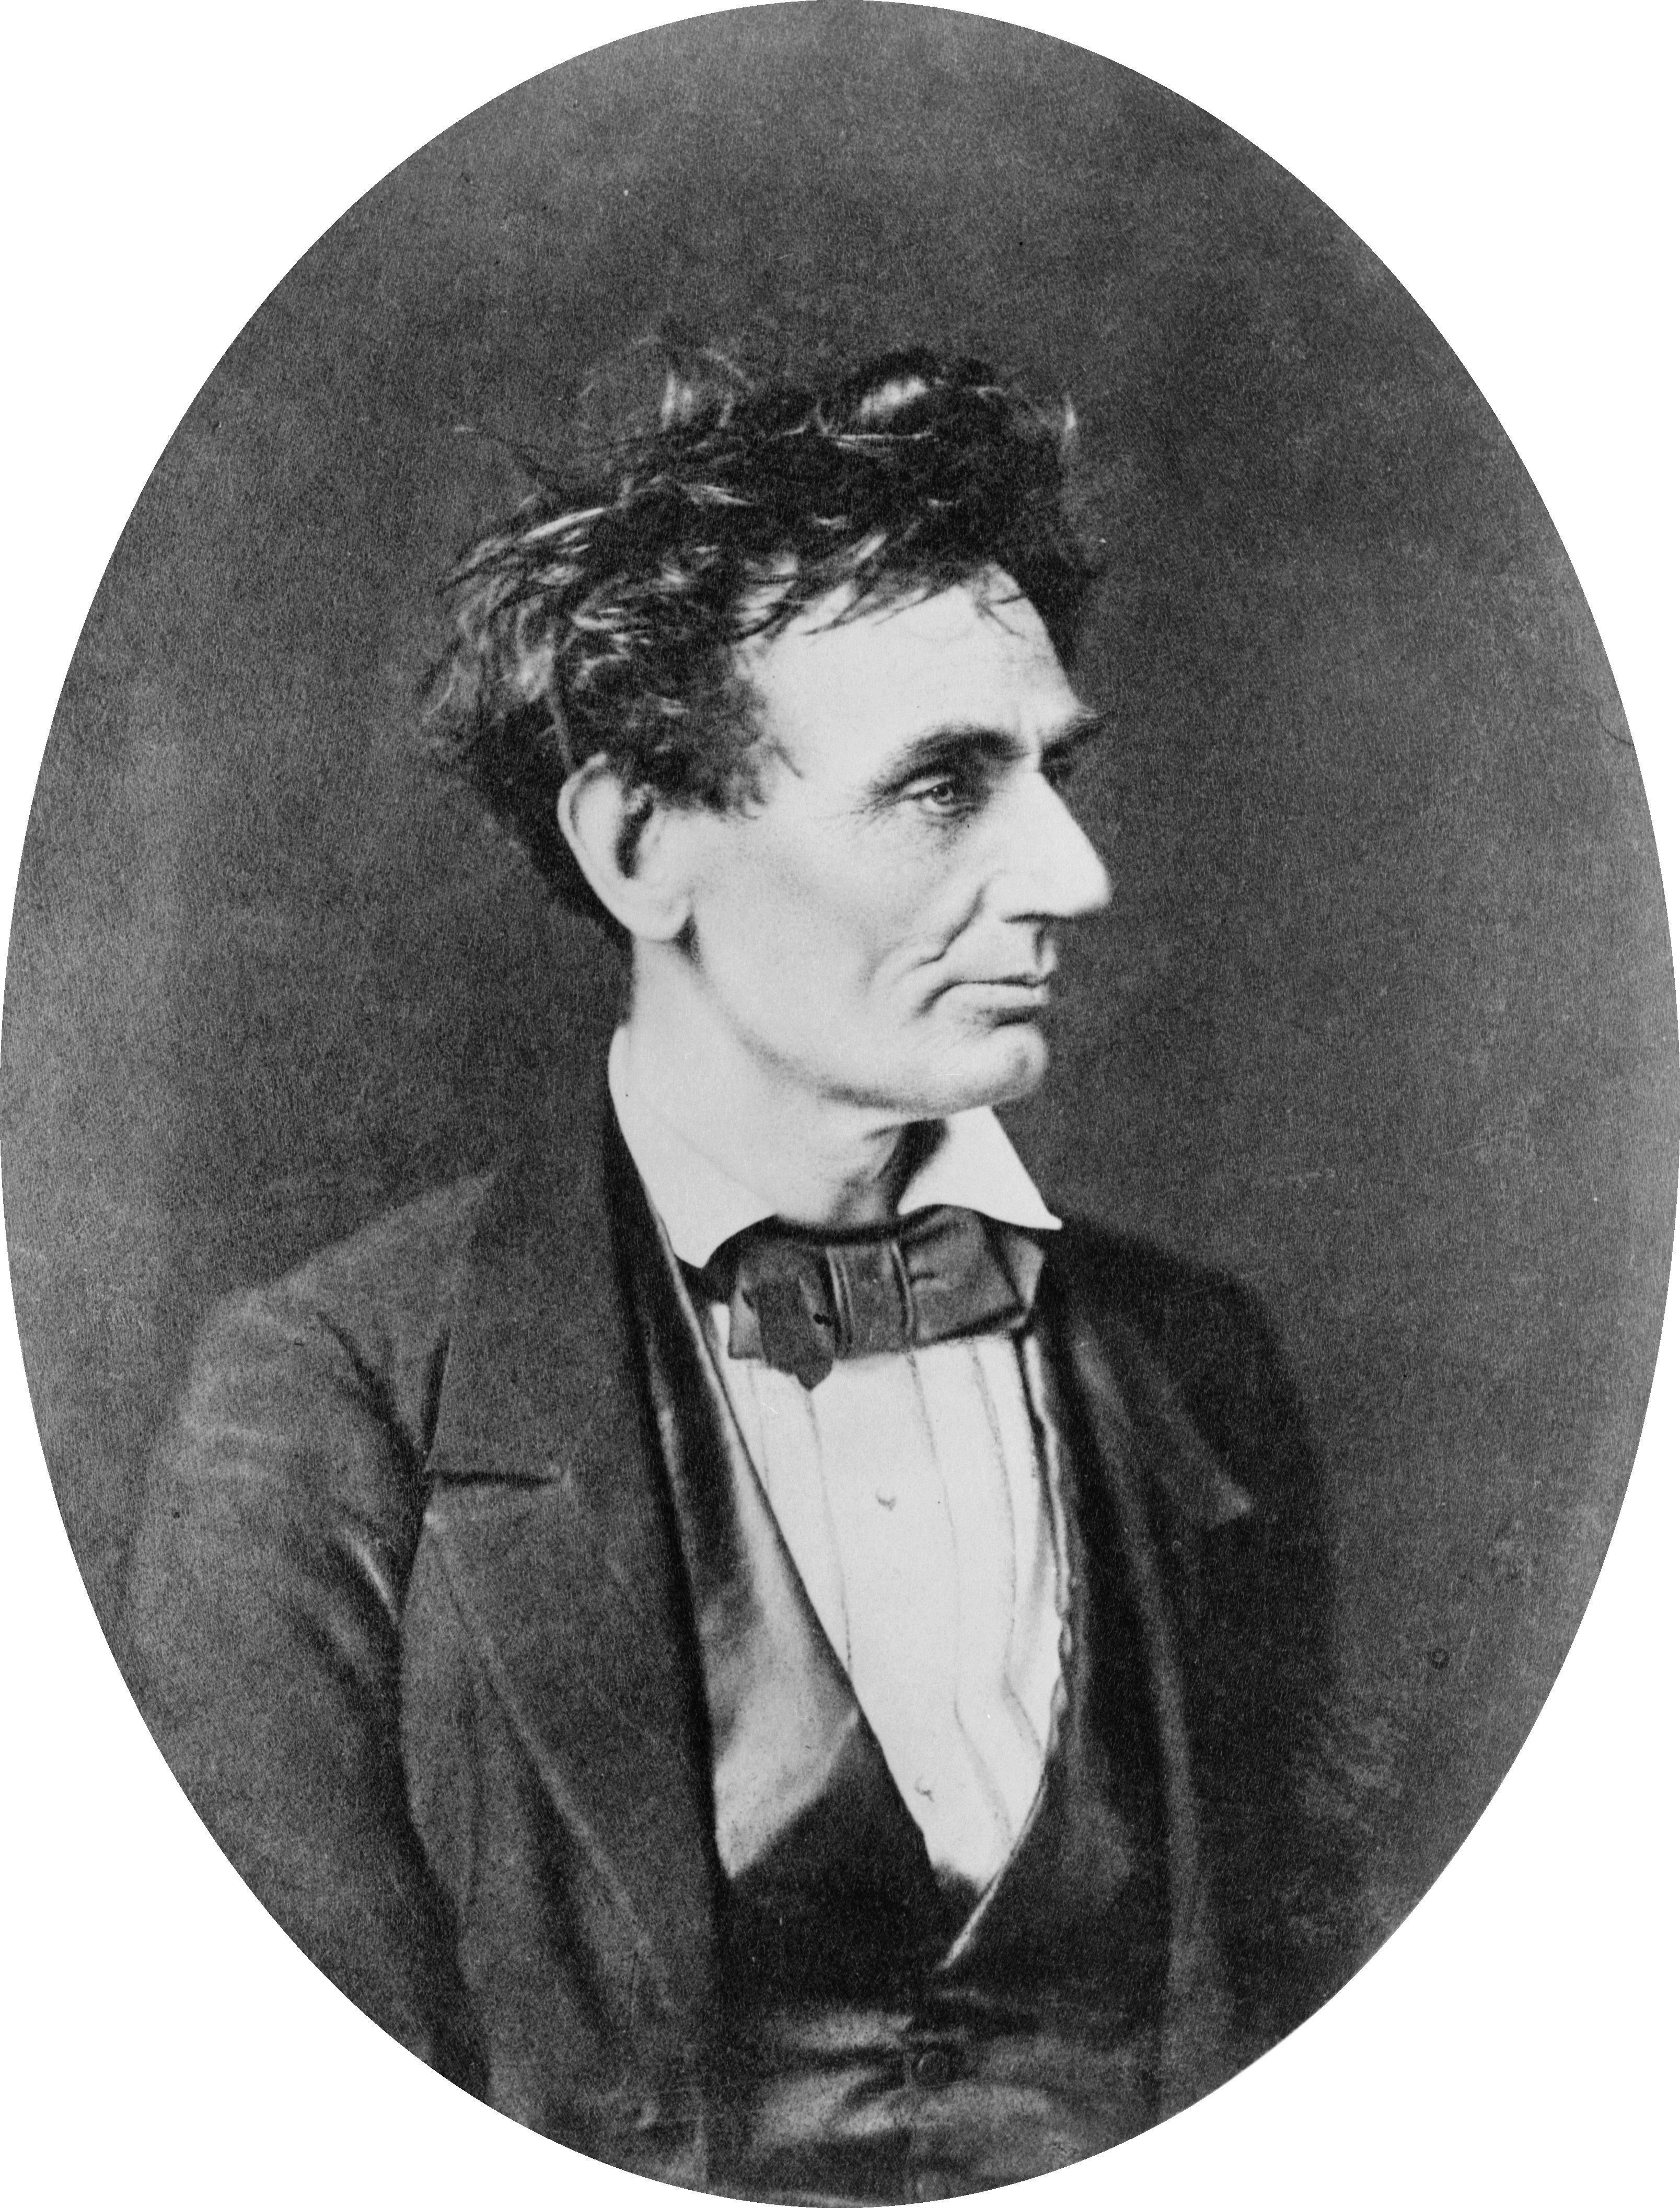 Abraham Lincoln immediately prior to Senate nomination, Chicago, Illinois. Photograph taken by Alexander Hesler (1823-1895) on February 28, 1857.